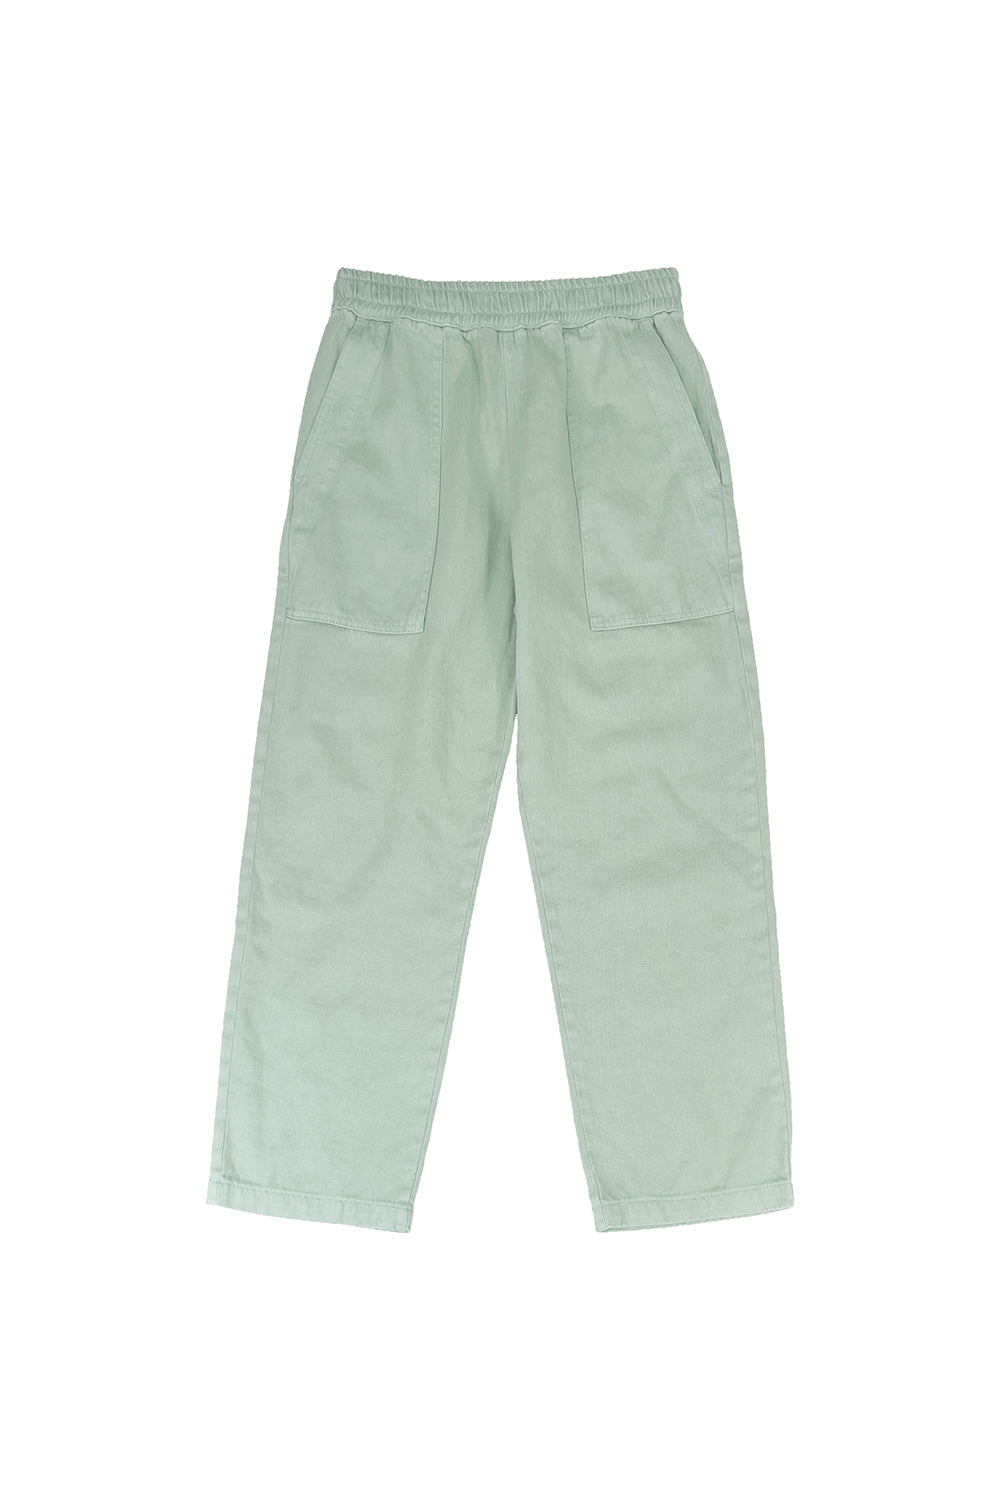 Ocean Pant | Jungmaven Hemp Clothing & Accessories / Color: Sage Green